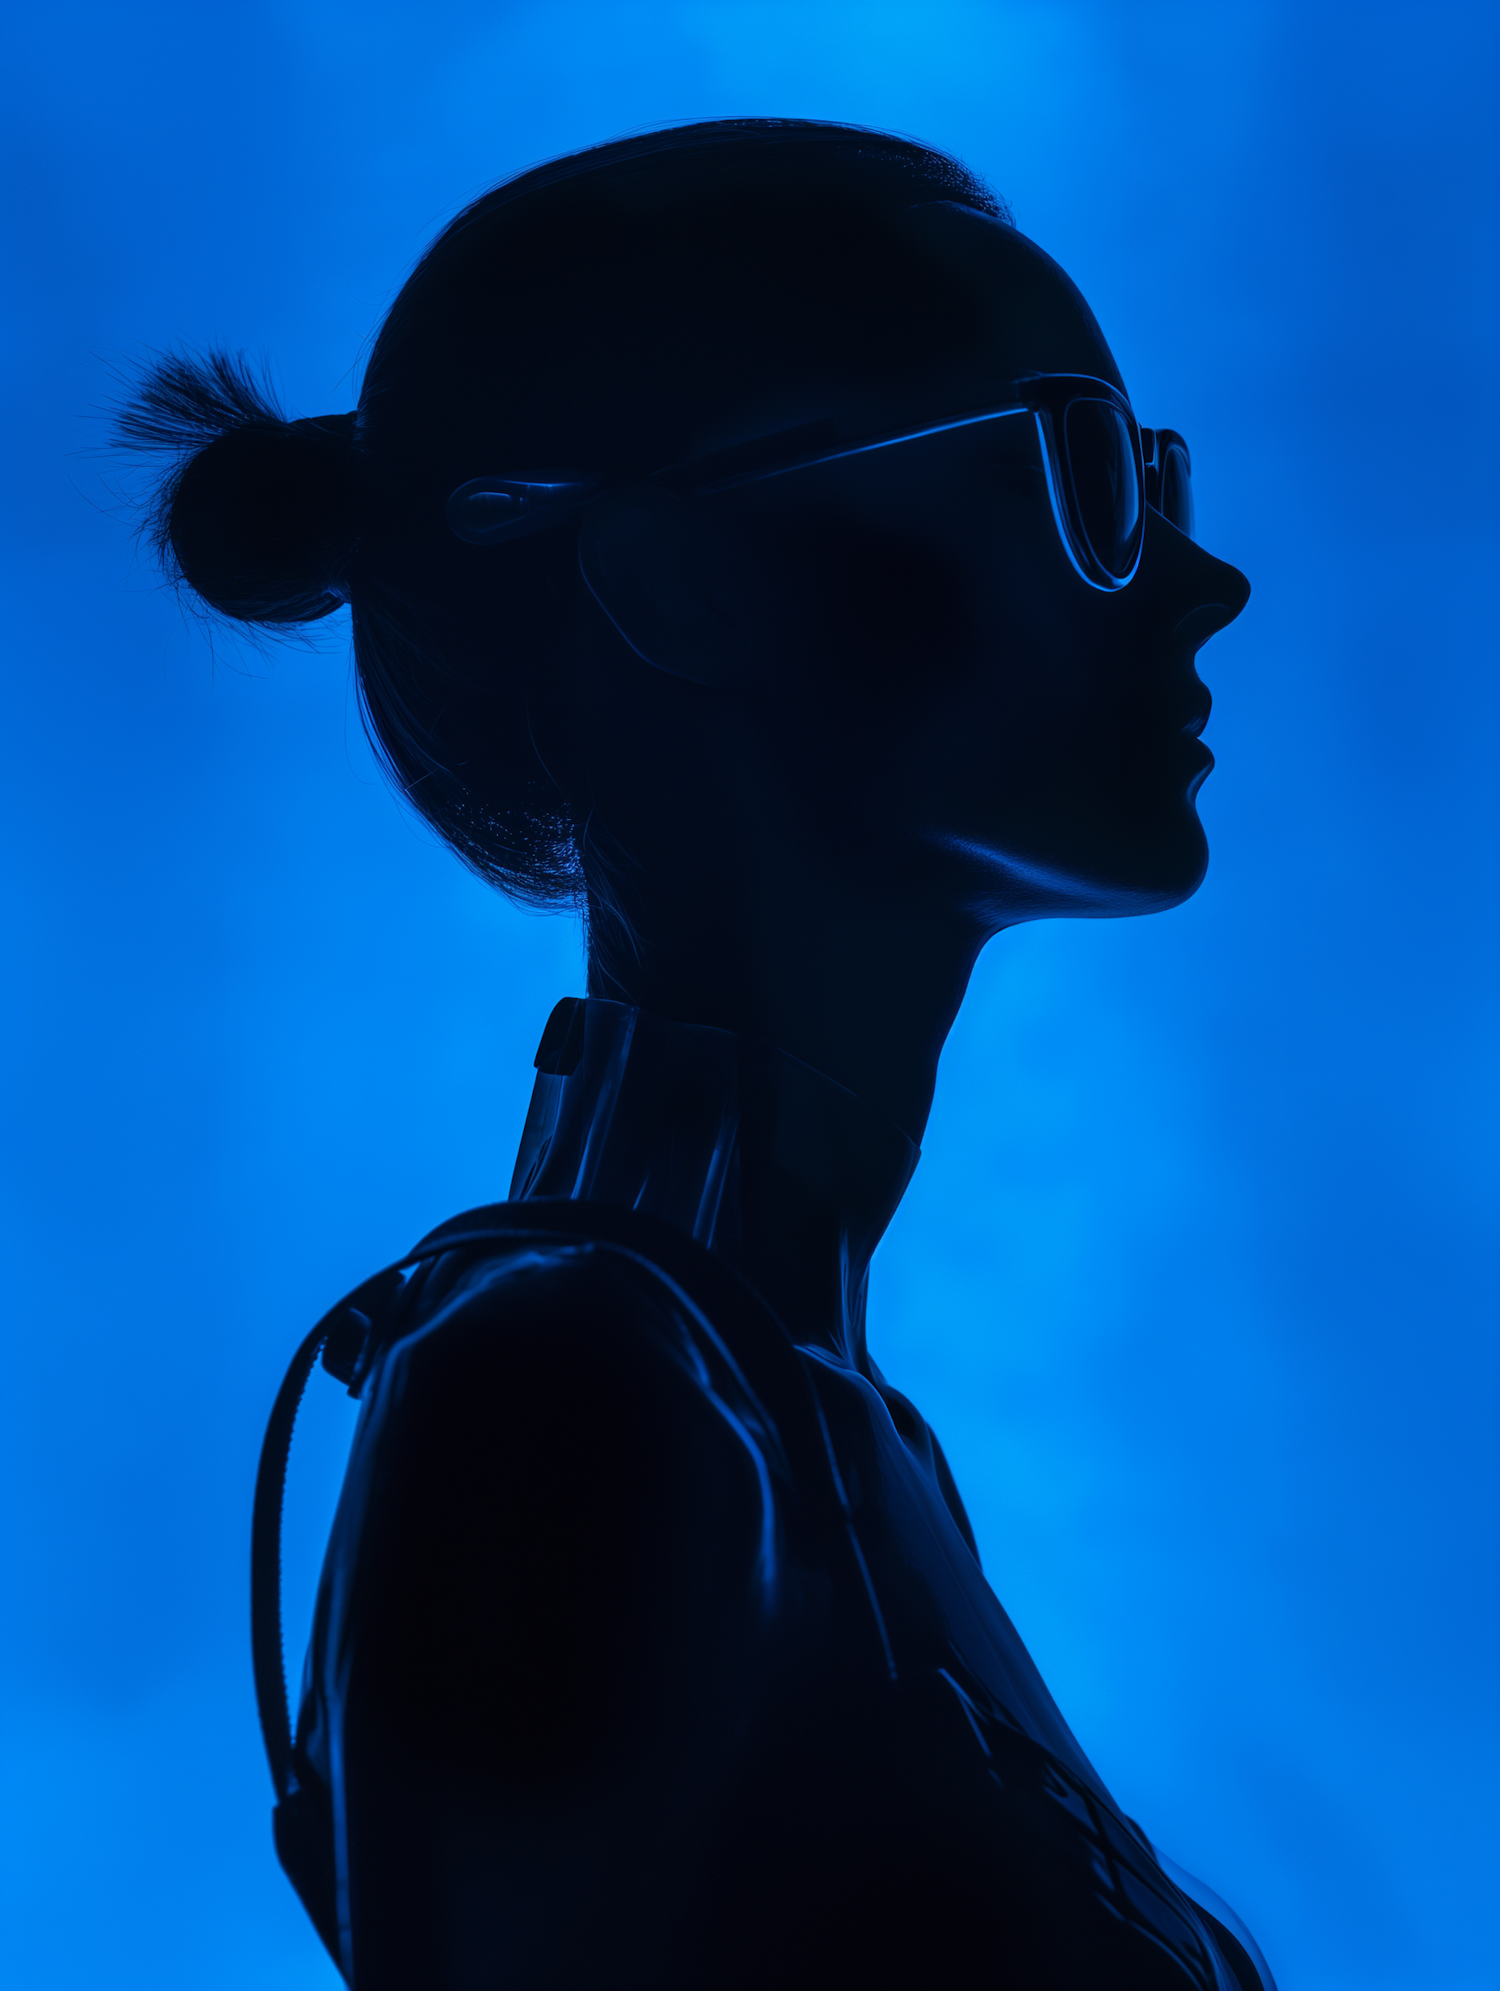 Contemplative Woman in Blue Silhouette